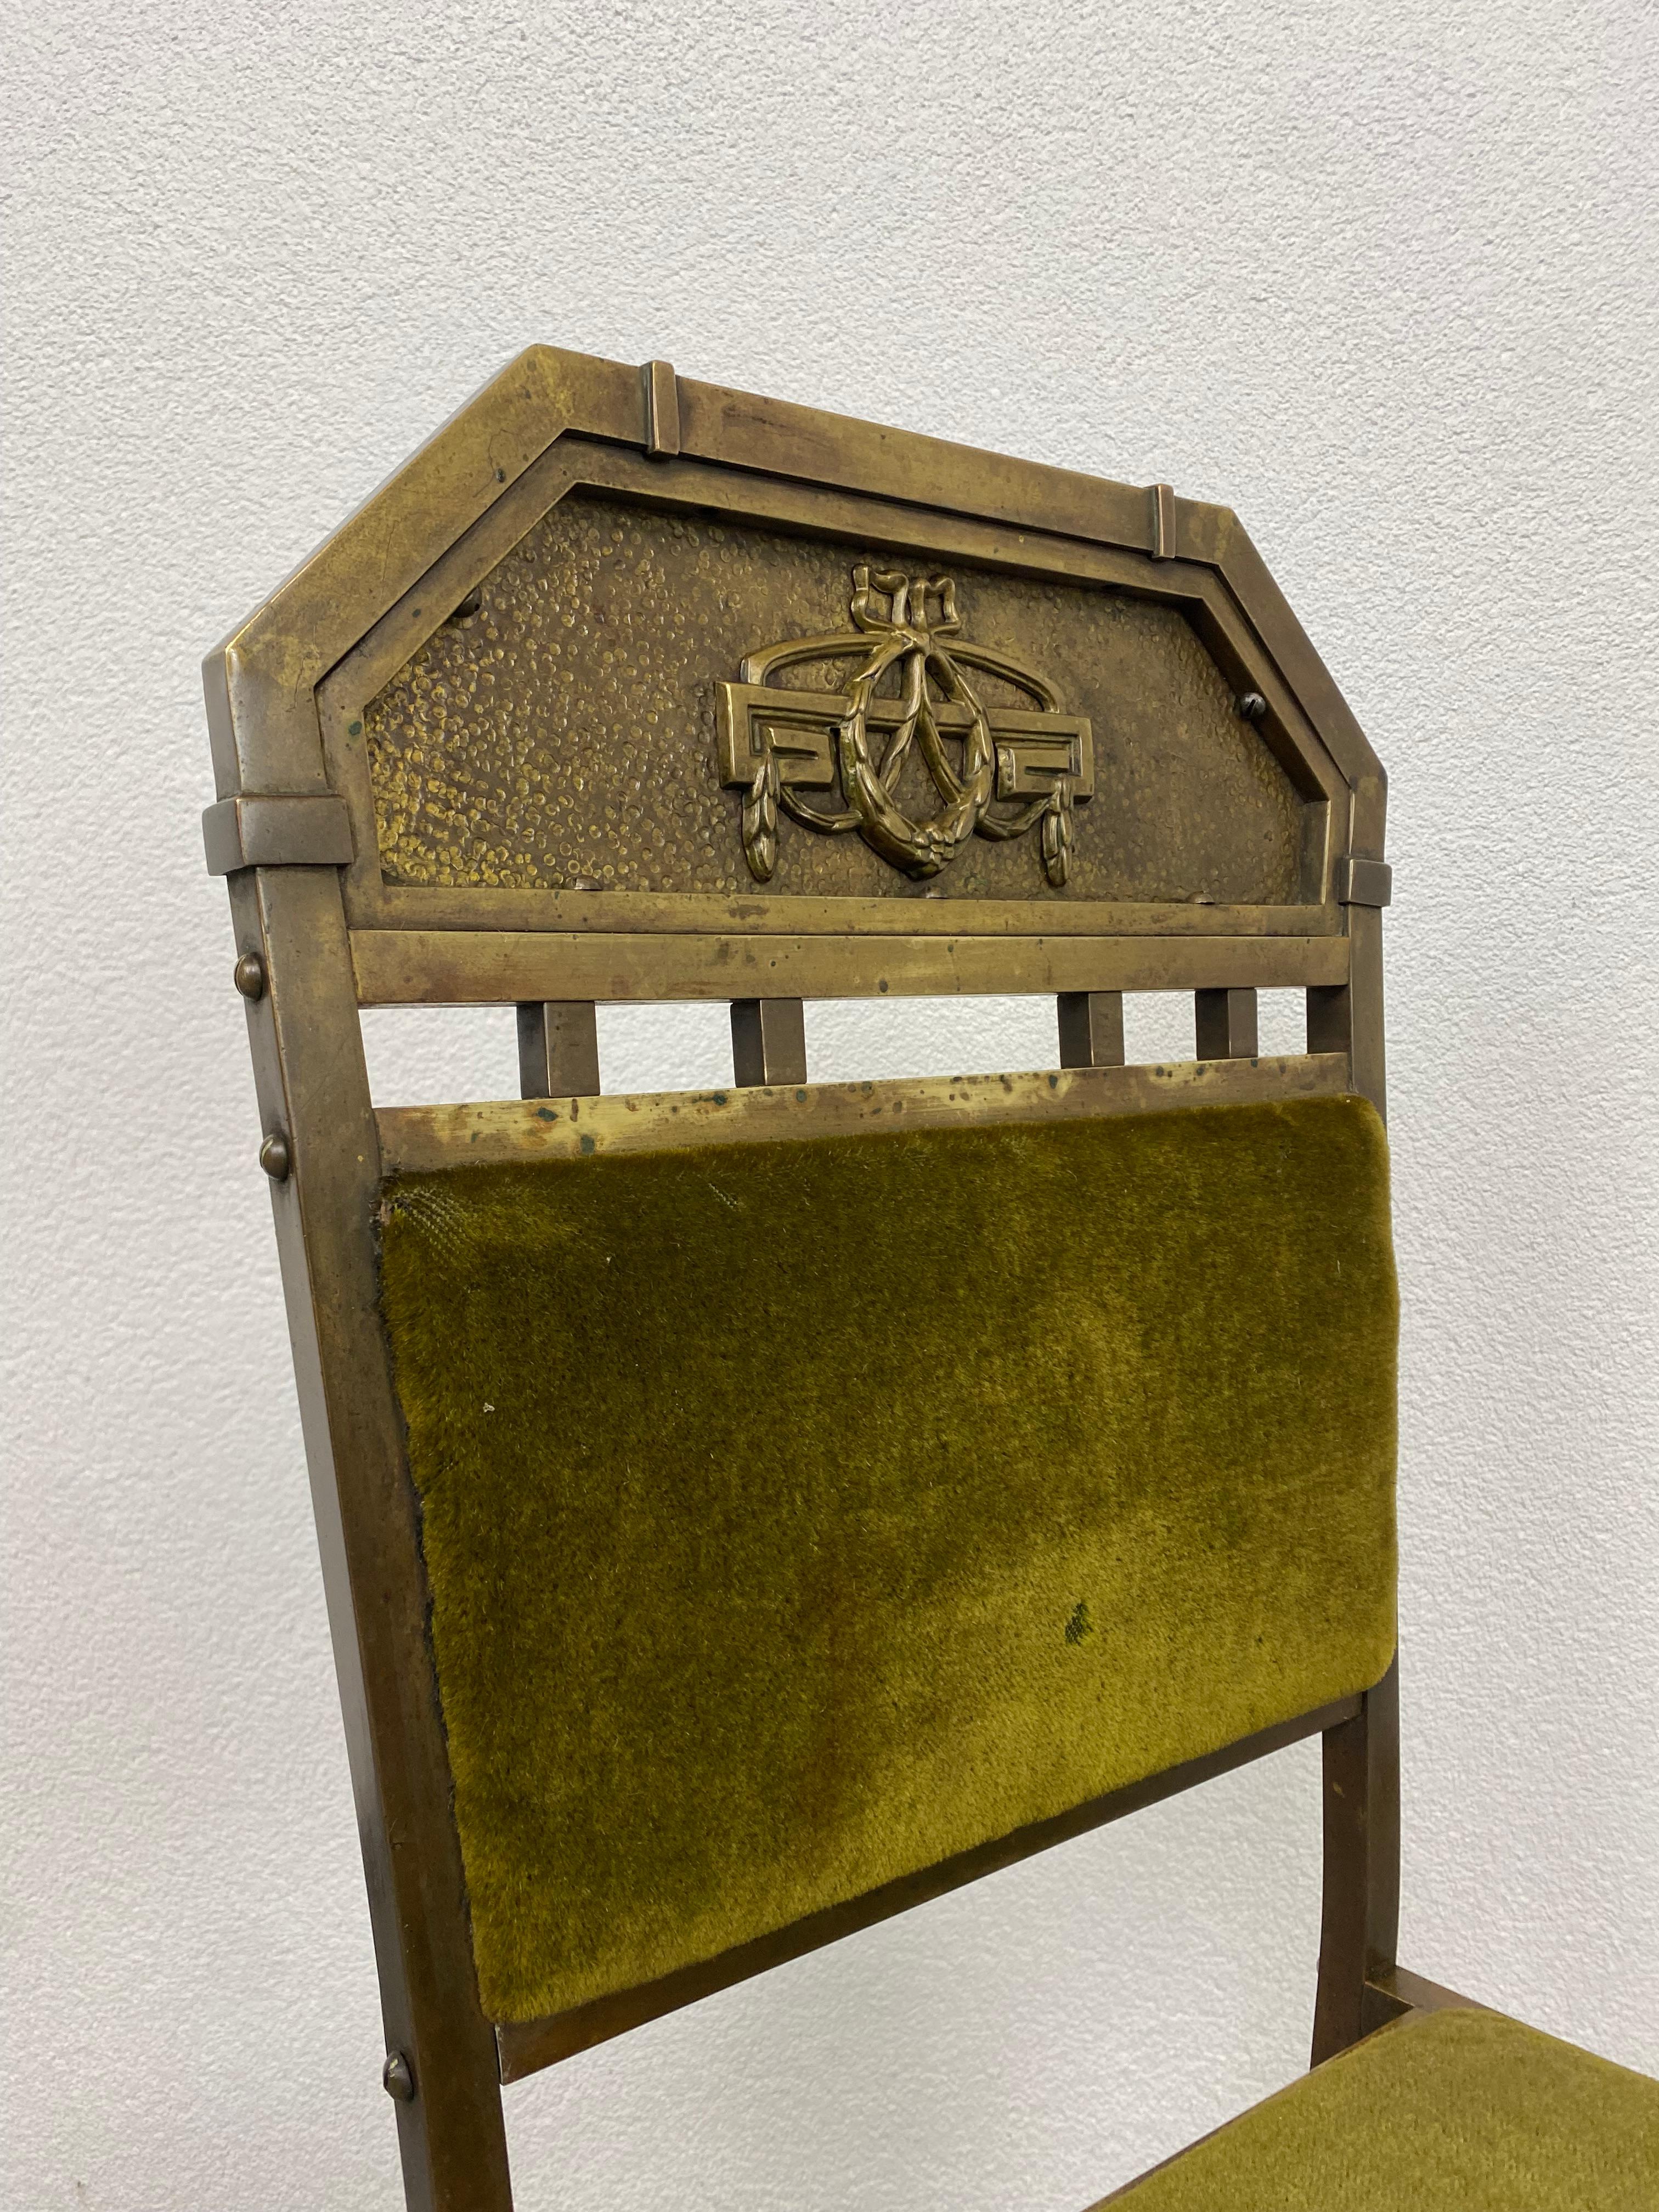 Jugendstil brass chair in original vintage condition with signs of usage.